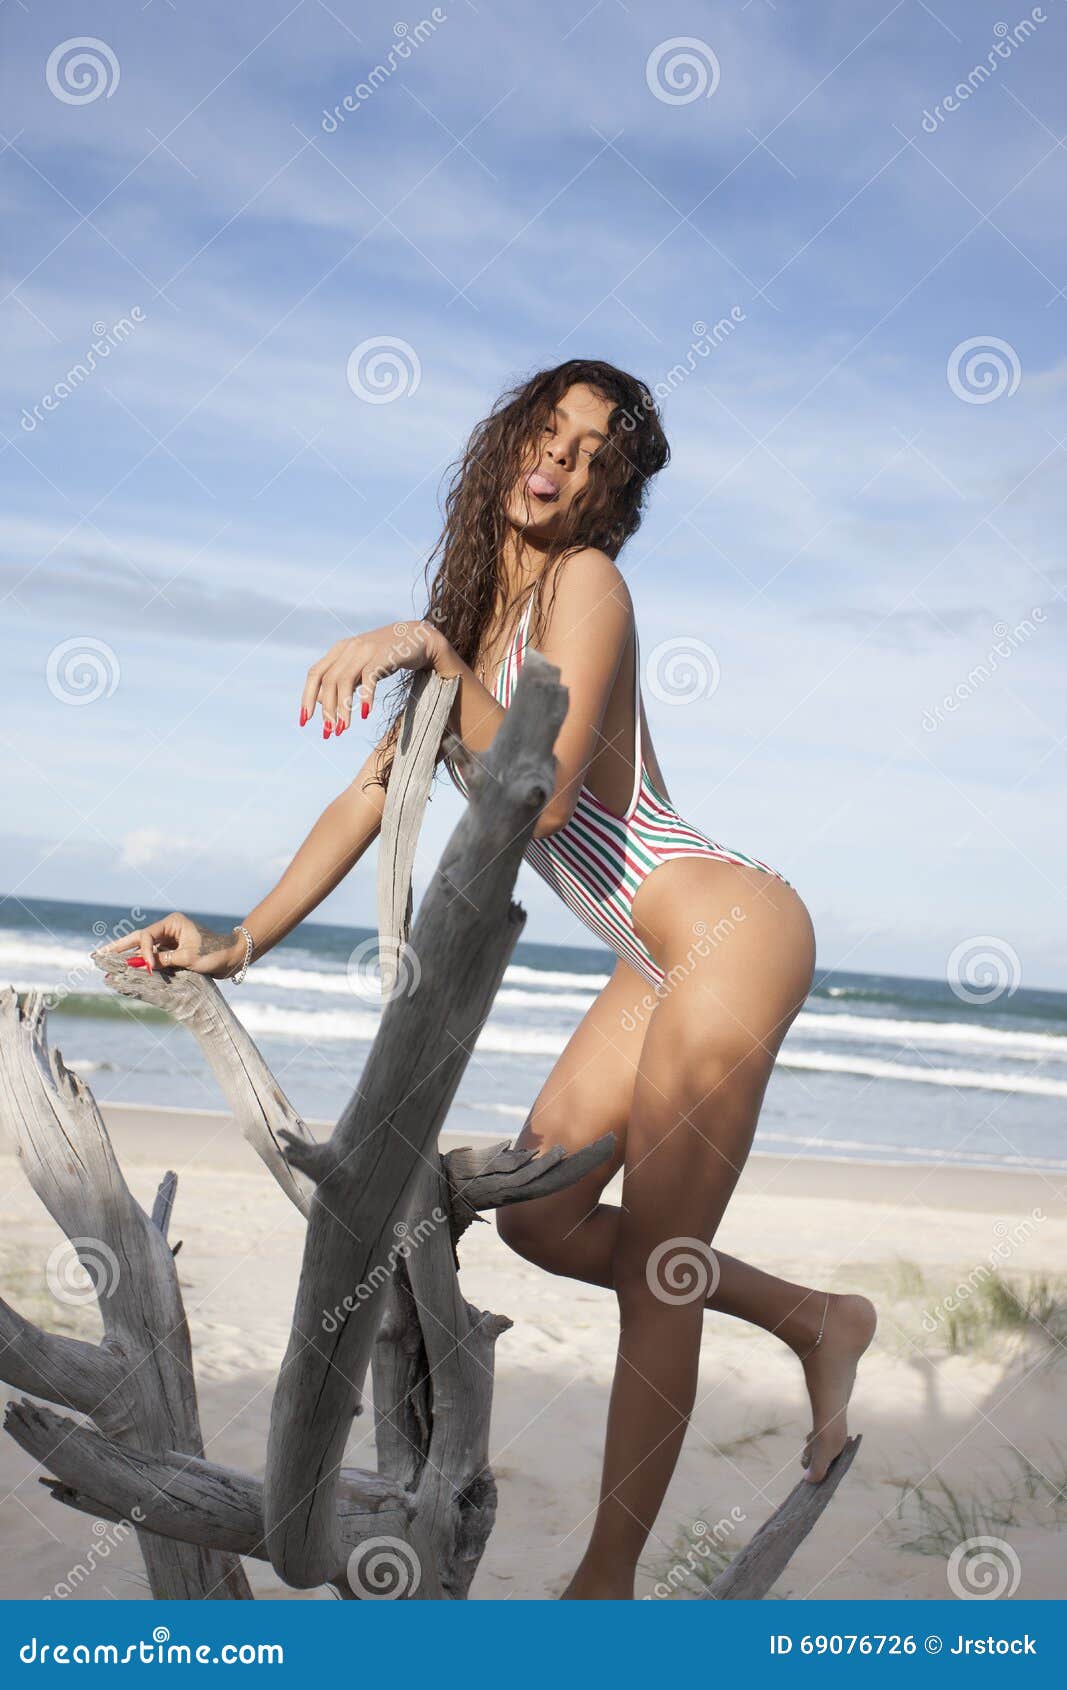 Bikini Lady Standing On Broken Tree And Smiling Stock Photo ...